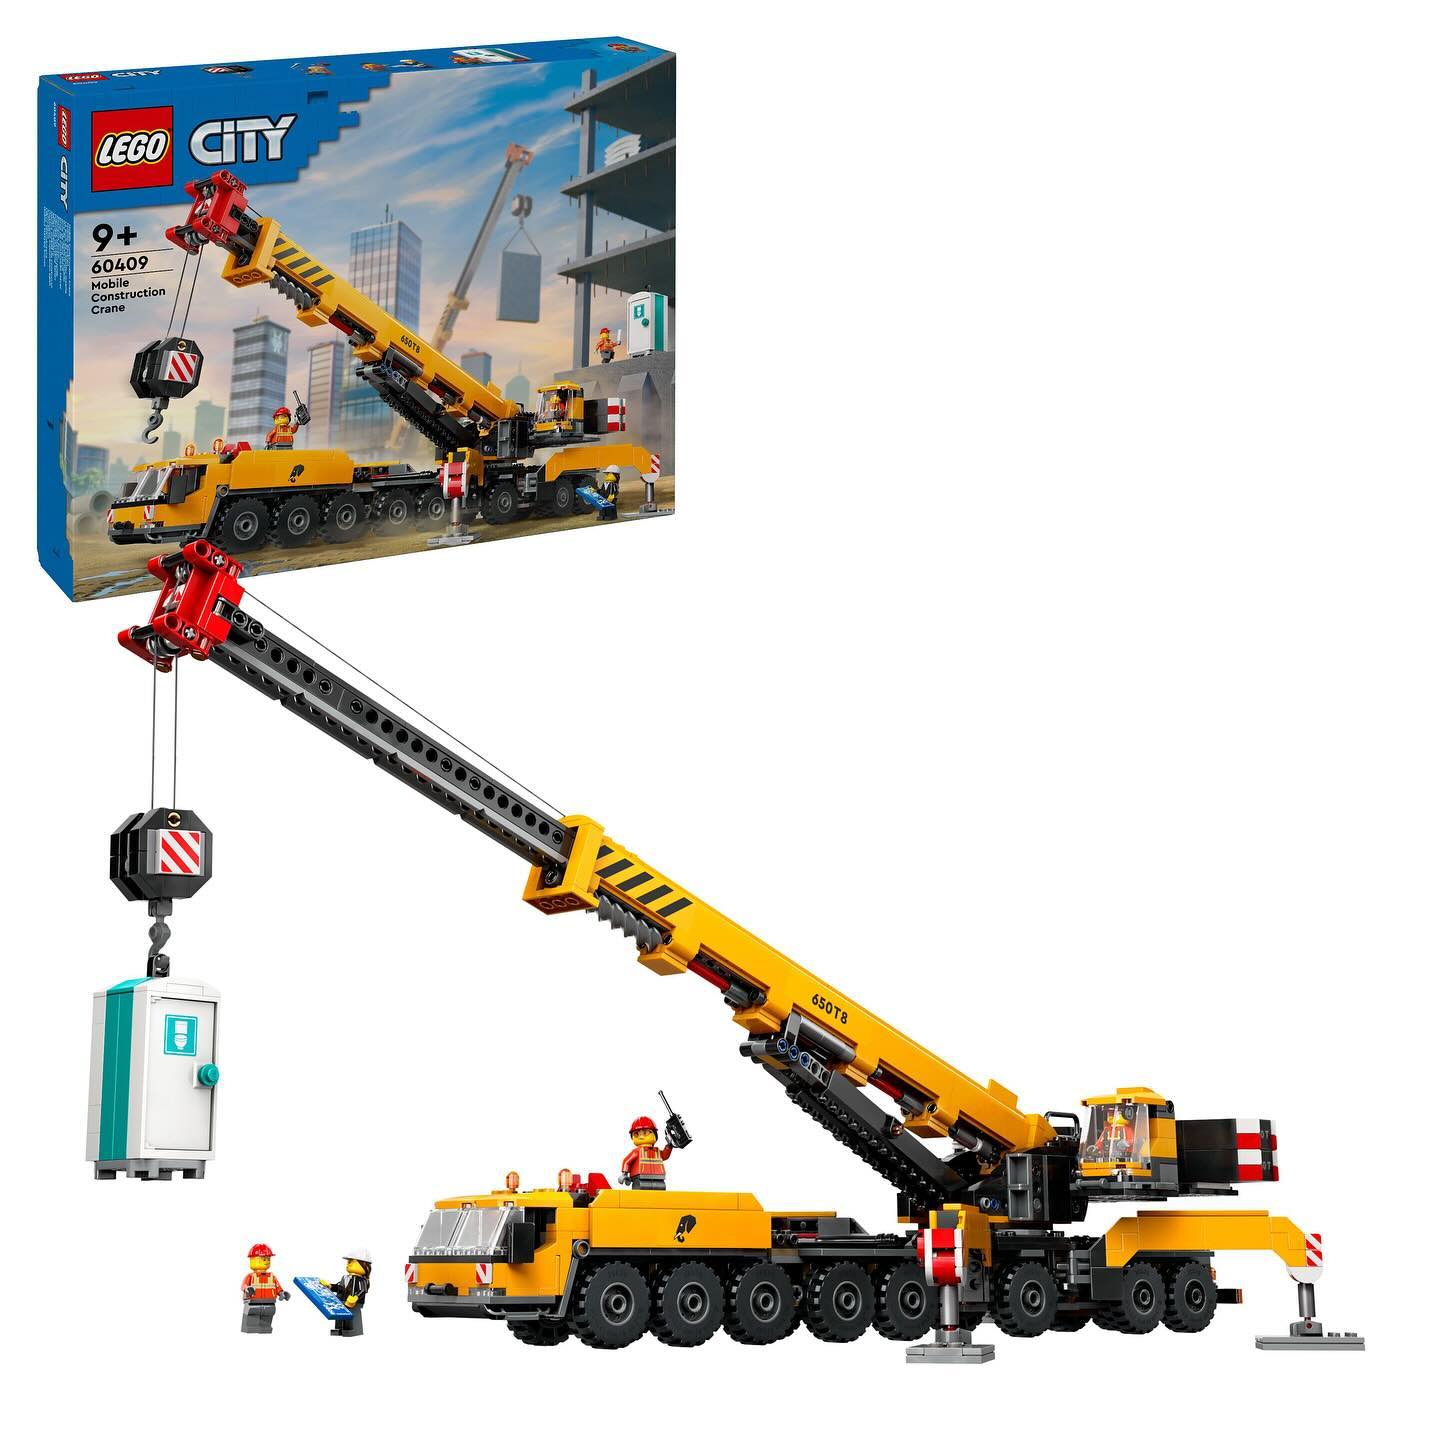 LEGO-City-Mobile-Construction-Crane-60409.jpg